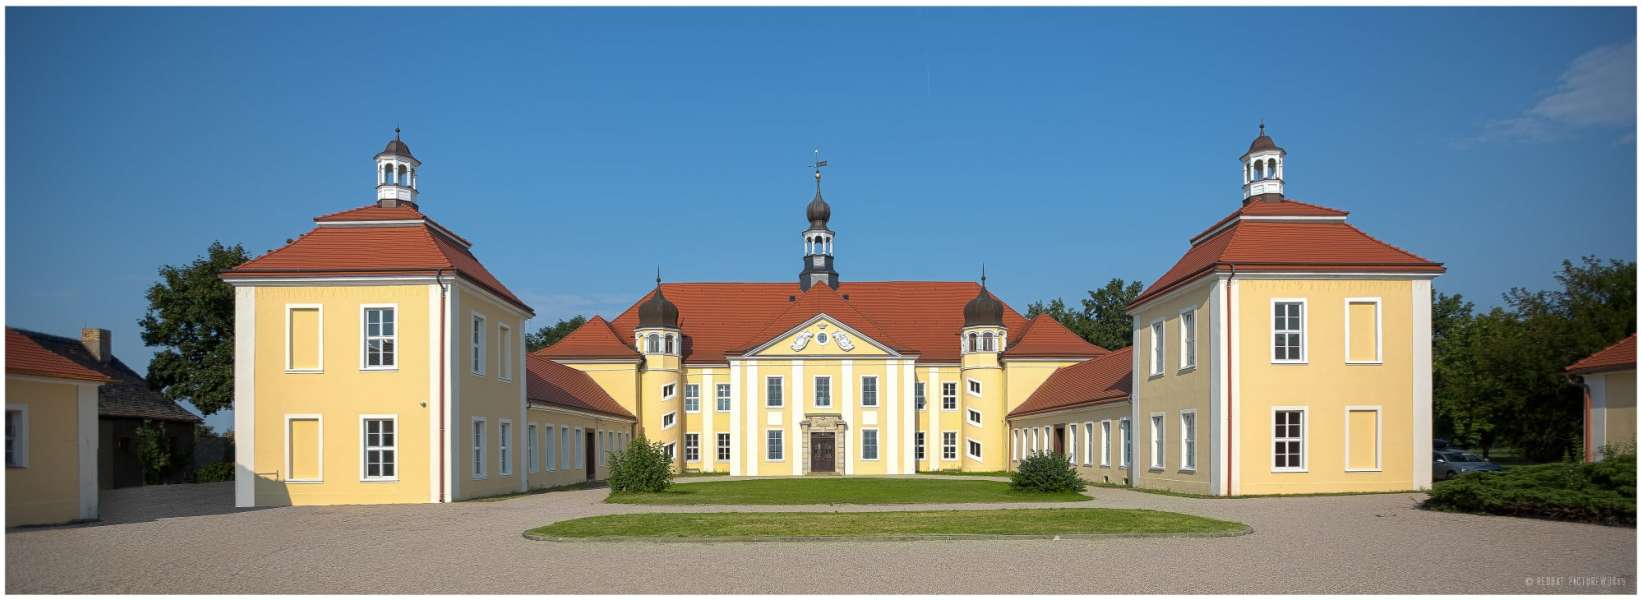 Schloss Hohenprießnitz-Hochzeitslocations in Hohenprießnitz